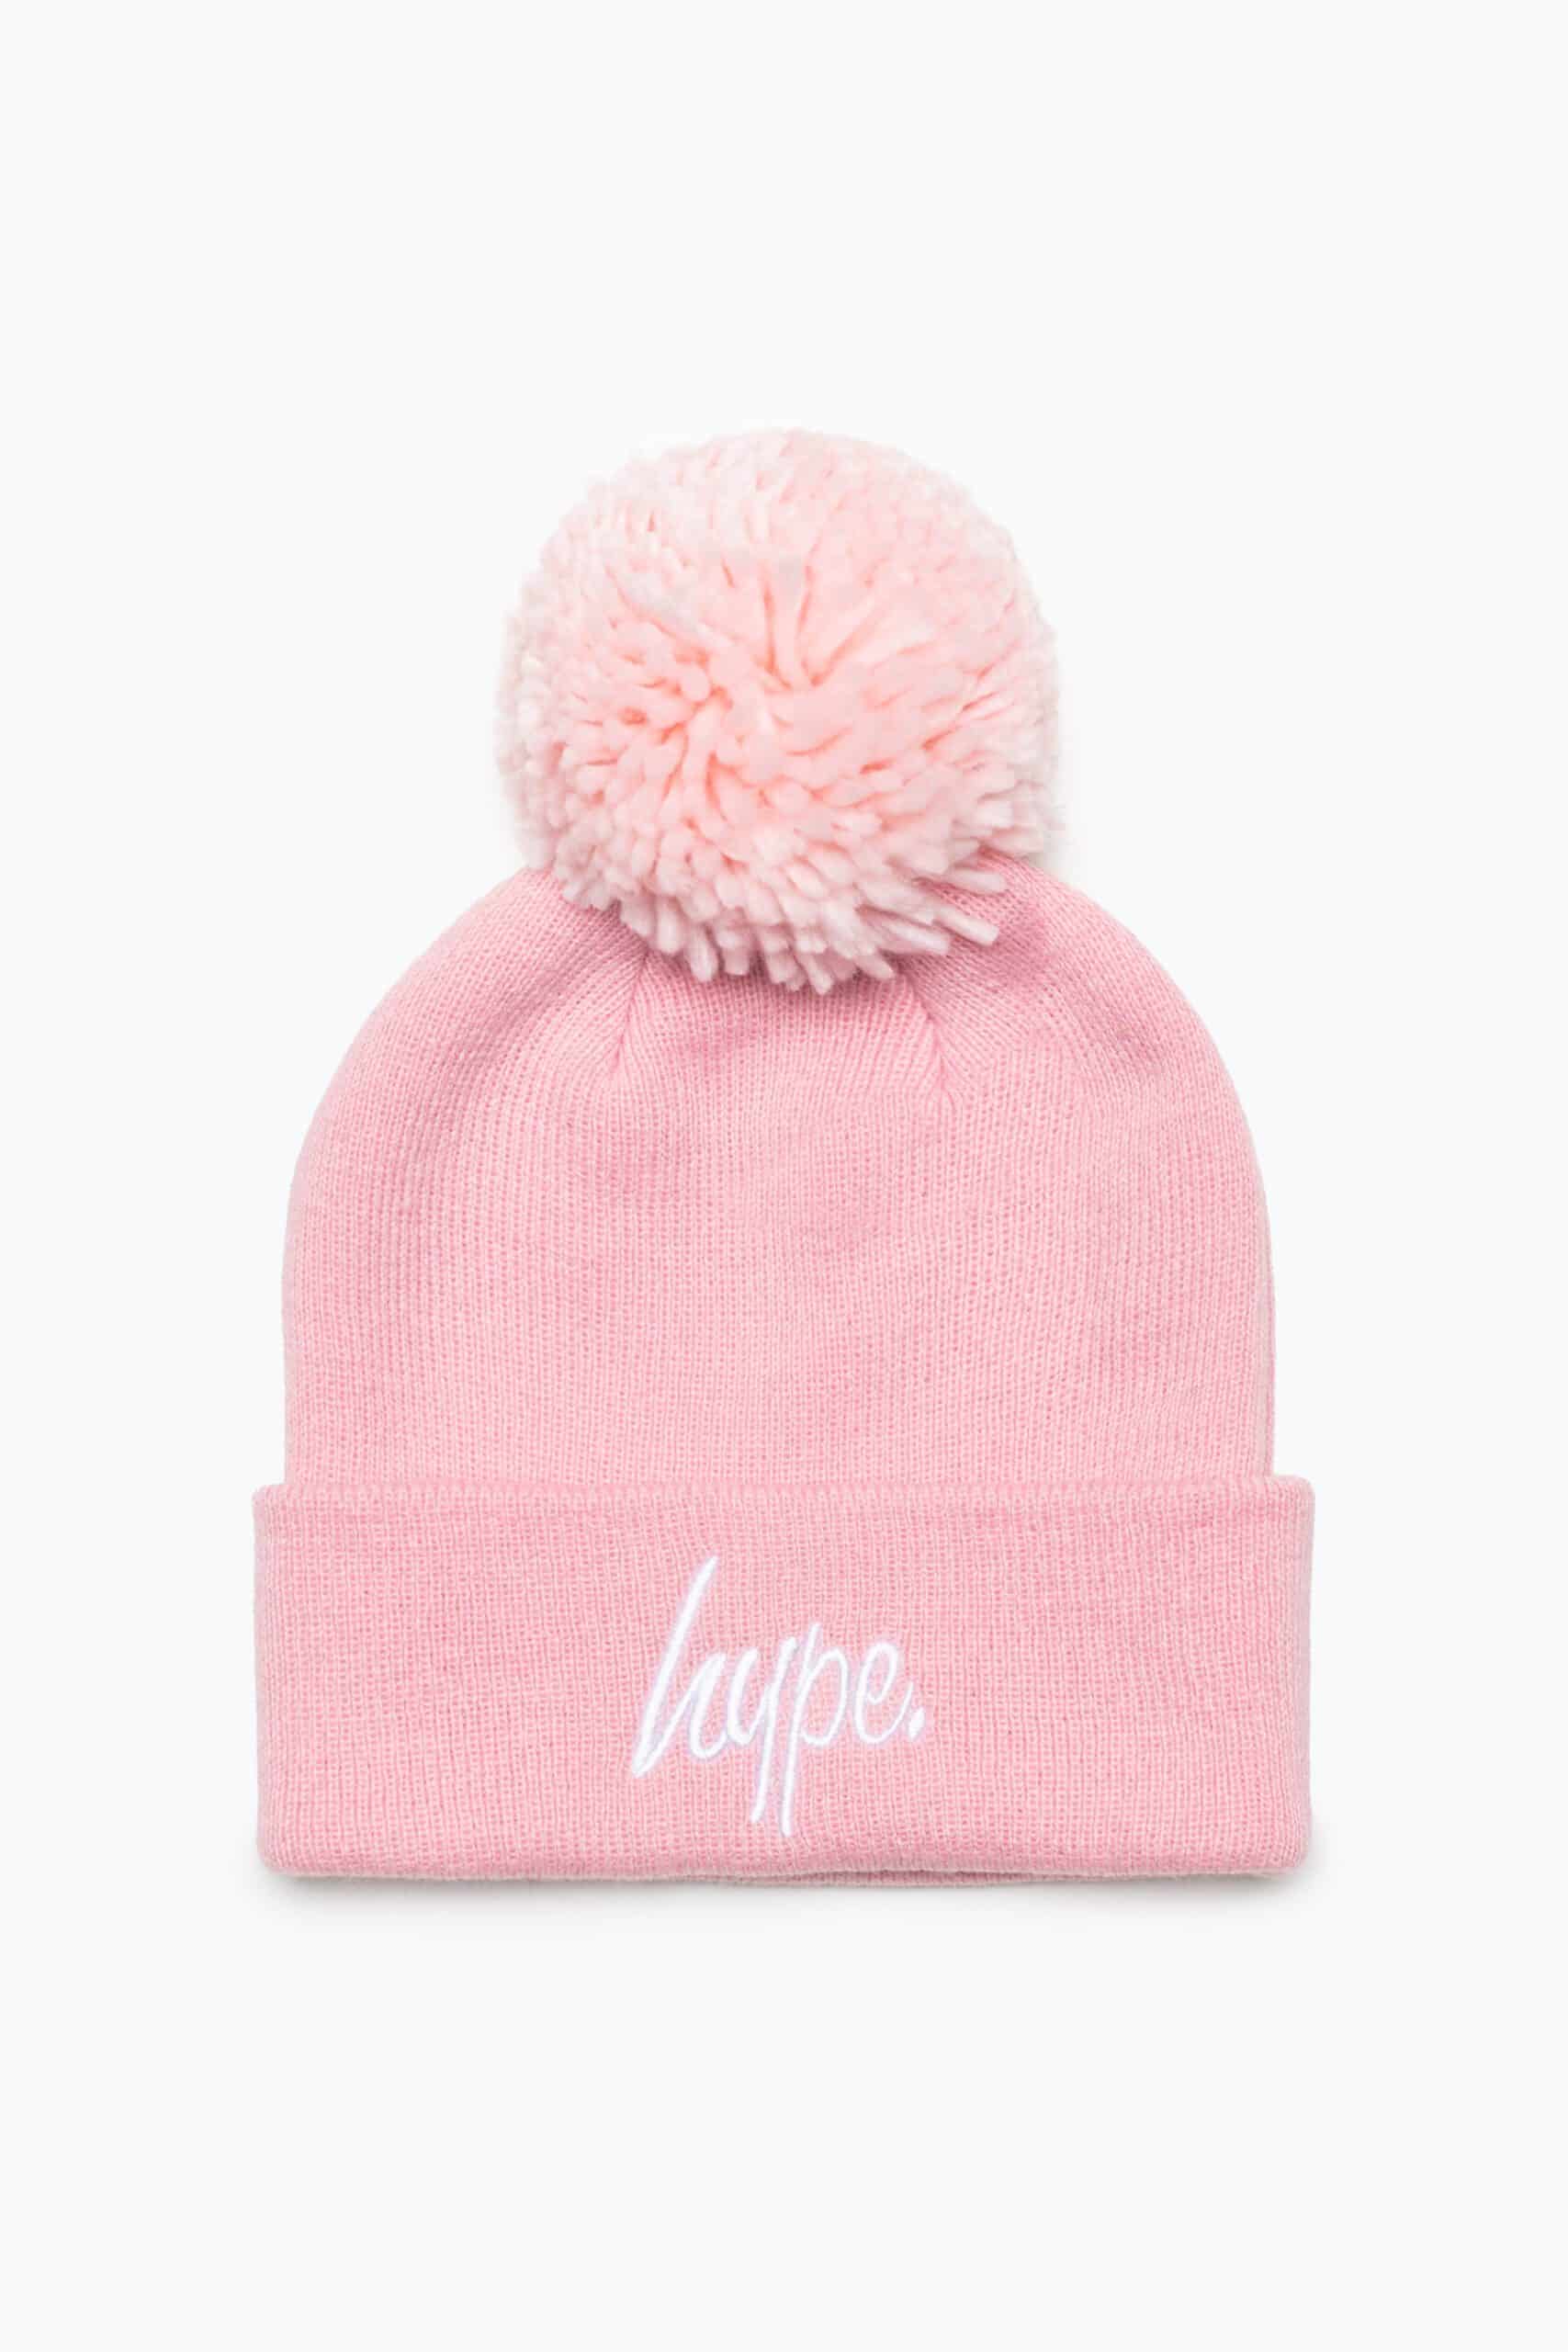 hype pale pink bobble hat